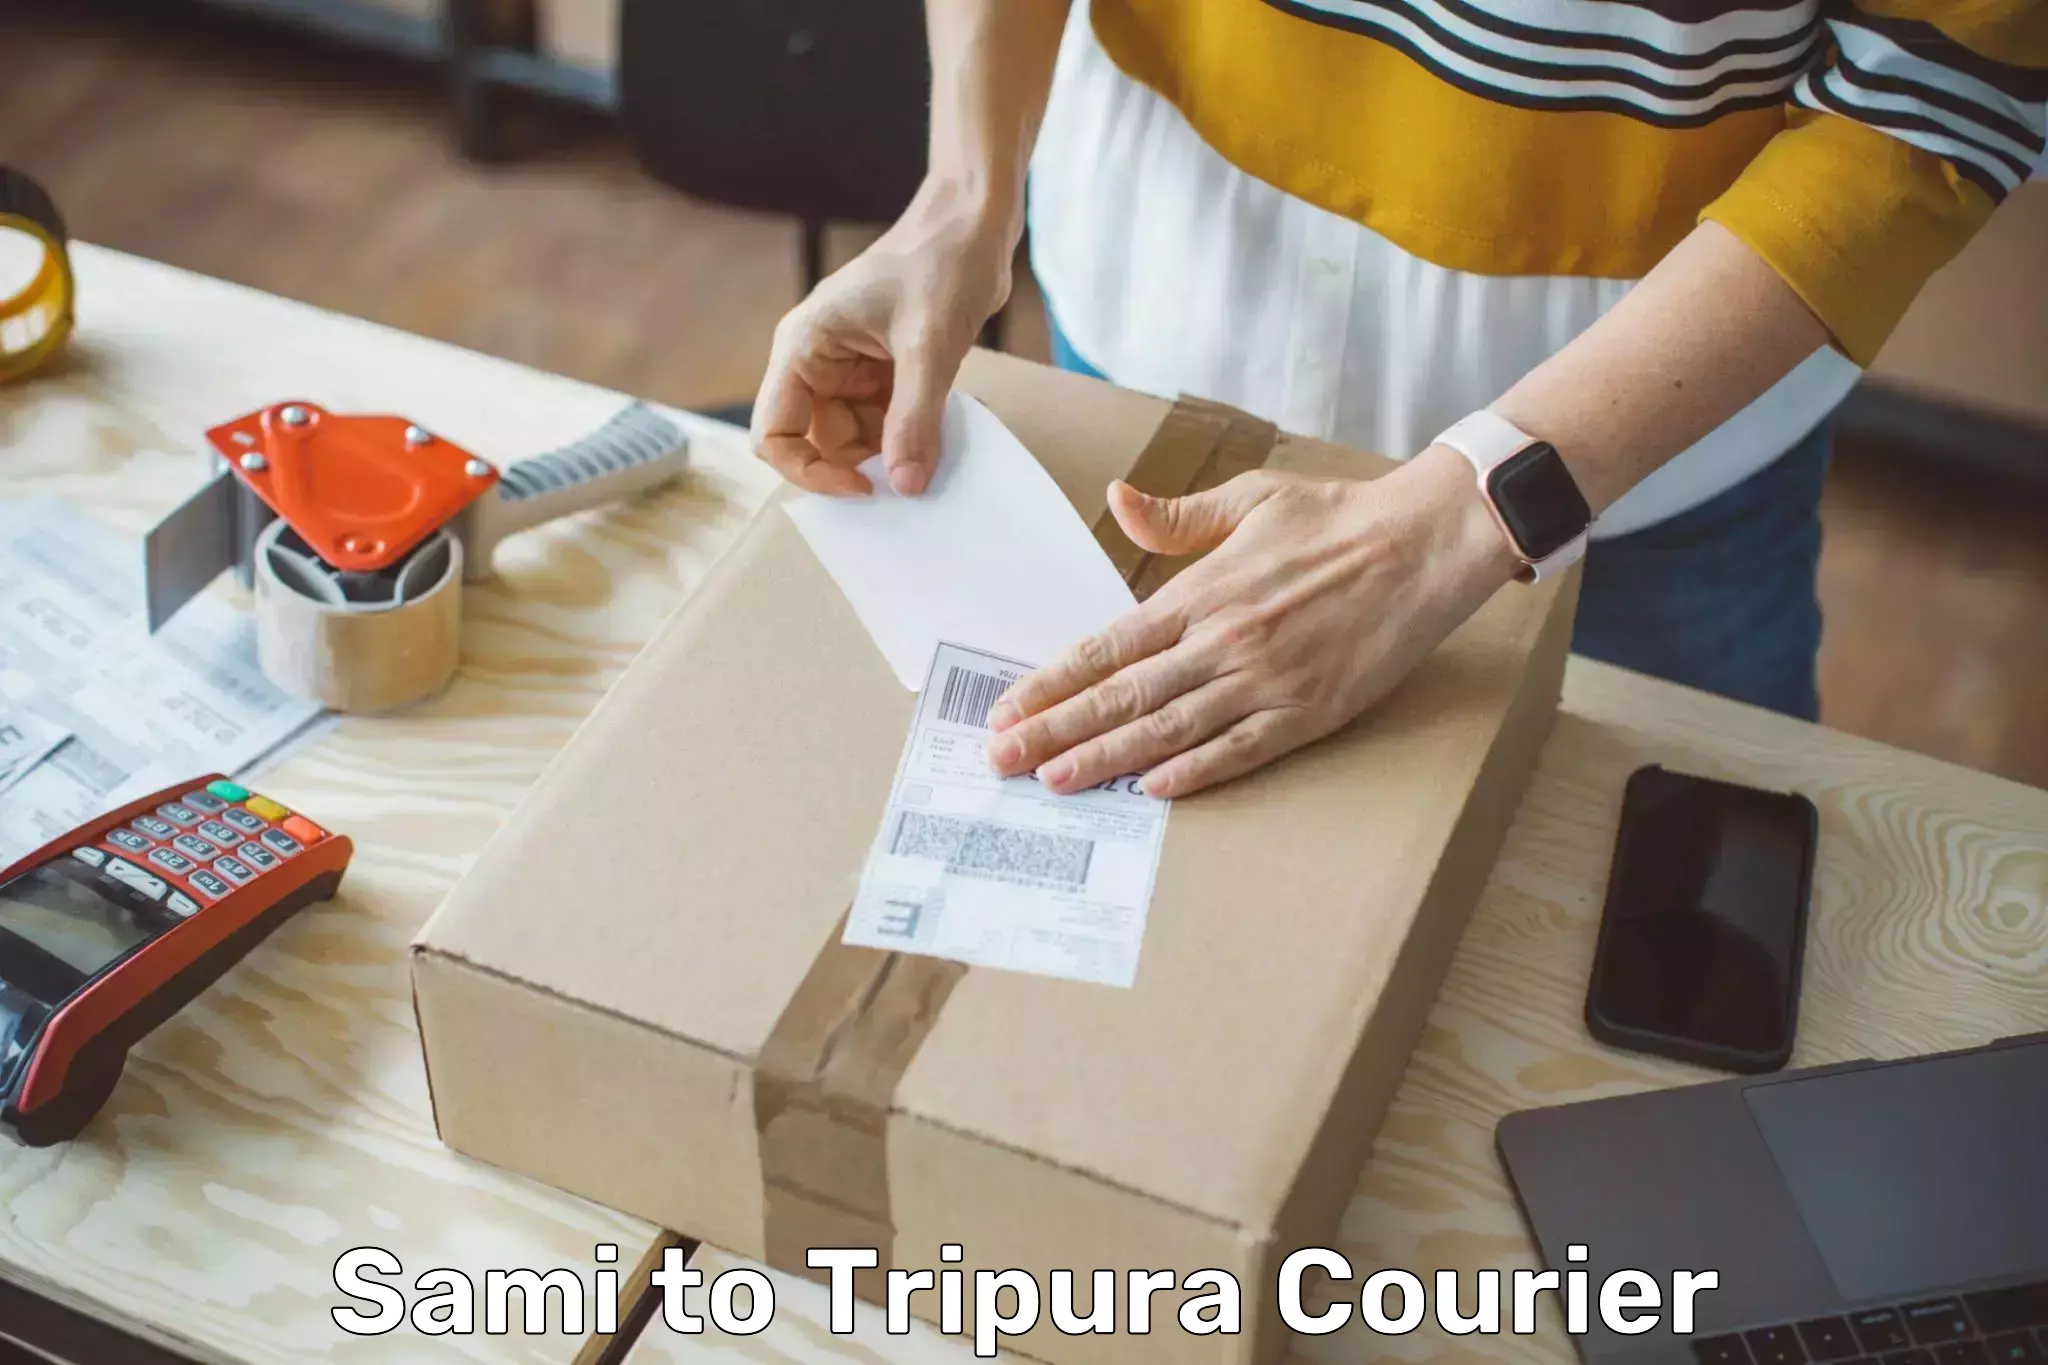 Logistics service provider Sami to Tripura